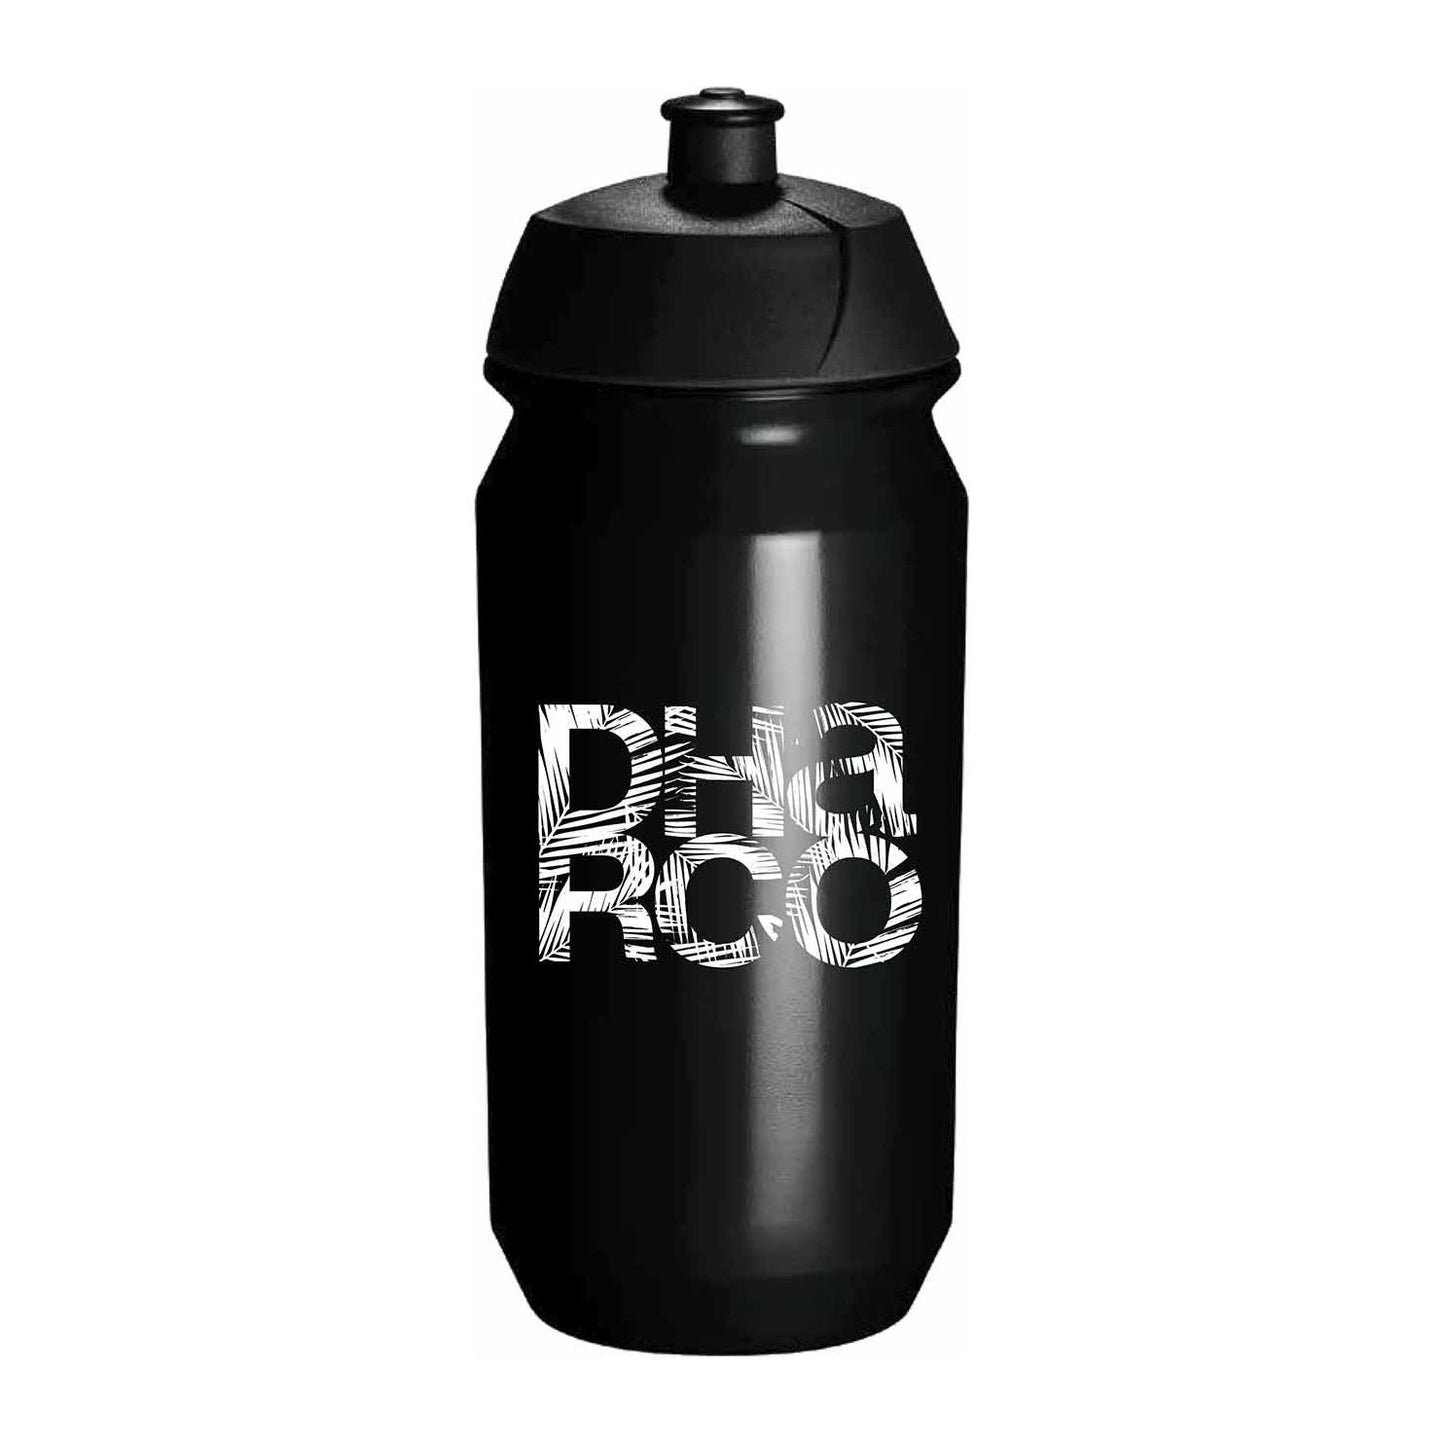 DHaRCO 500ml Water Bottle - Black - 500ml - Image 1